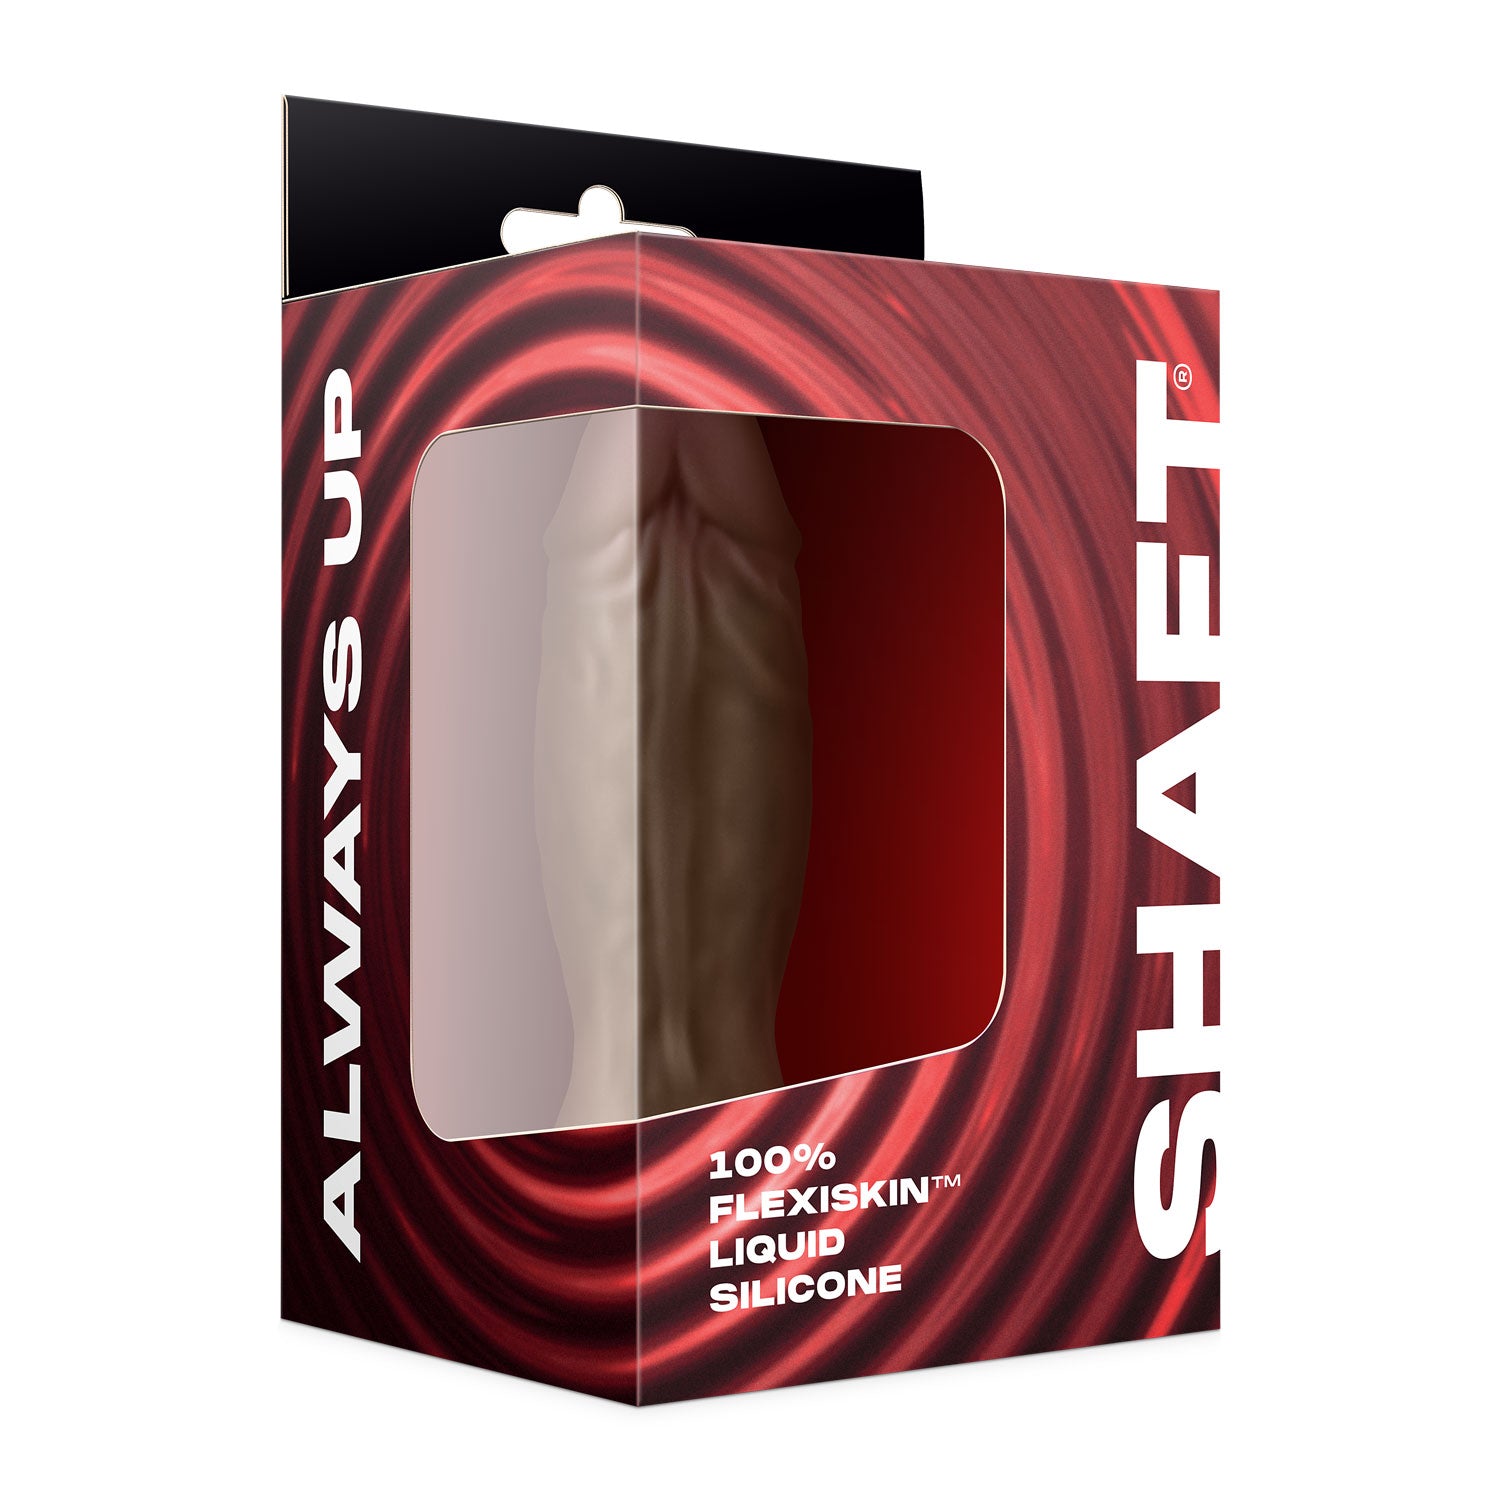 Shaft - Model B 4.3 Inch Liquid Silicone Bullet  Vibrator - Oak-1